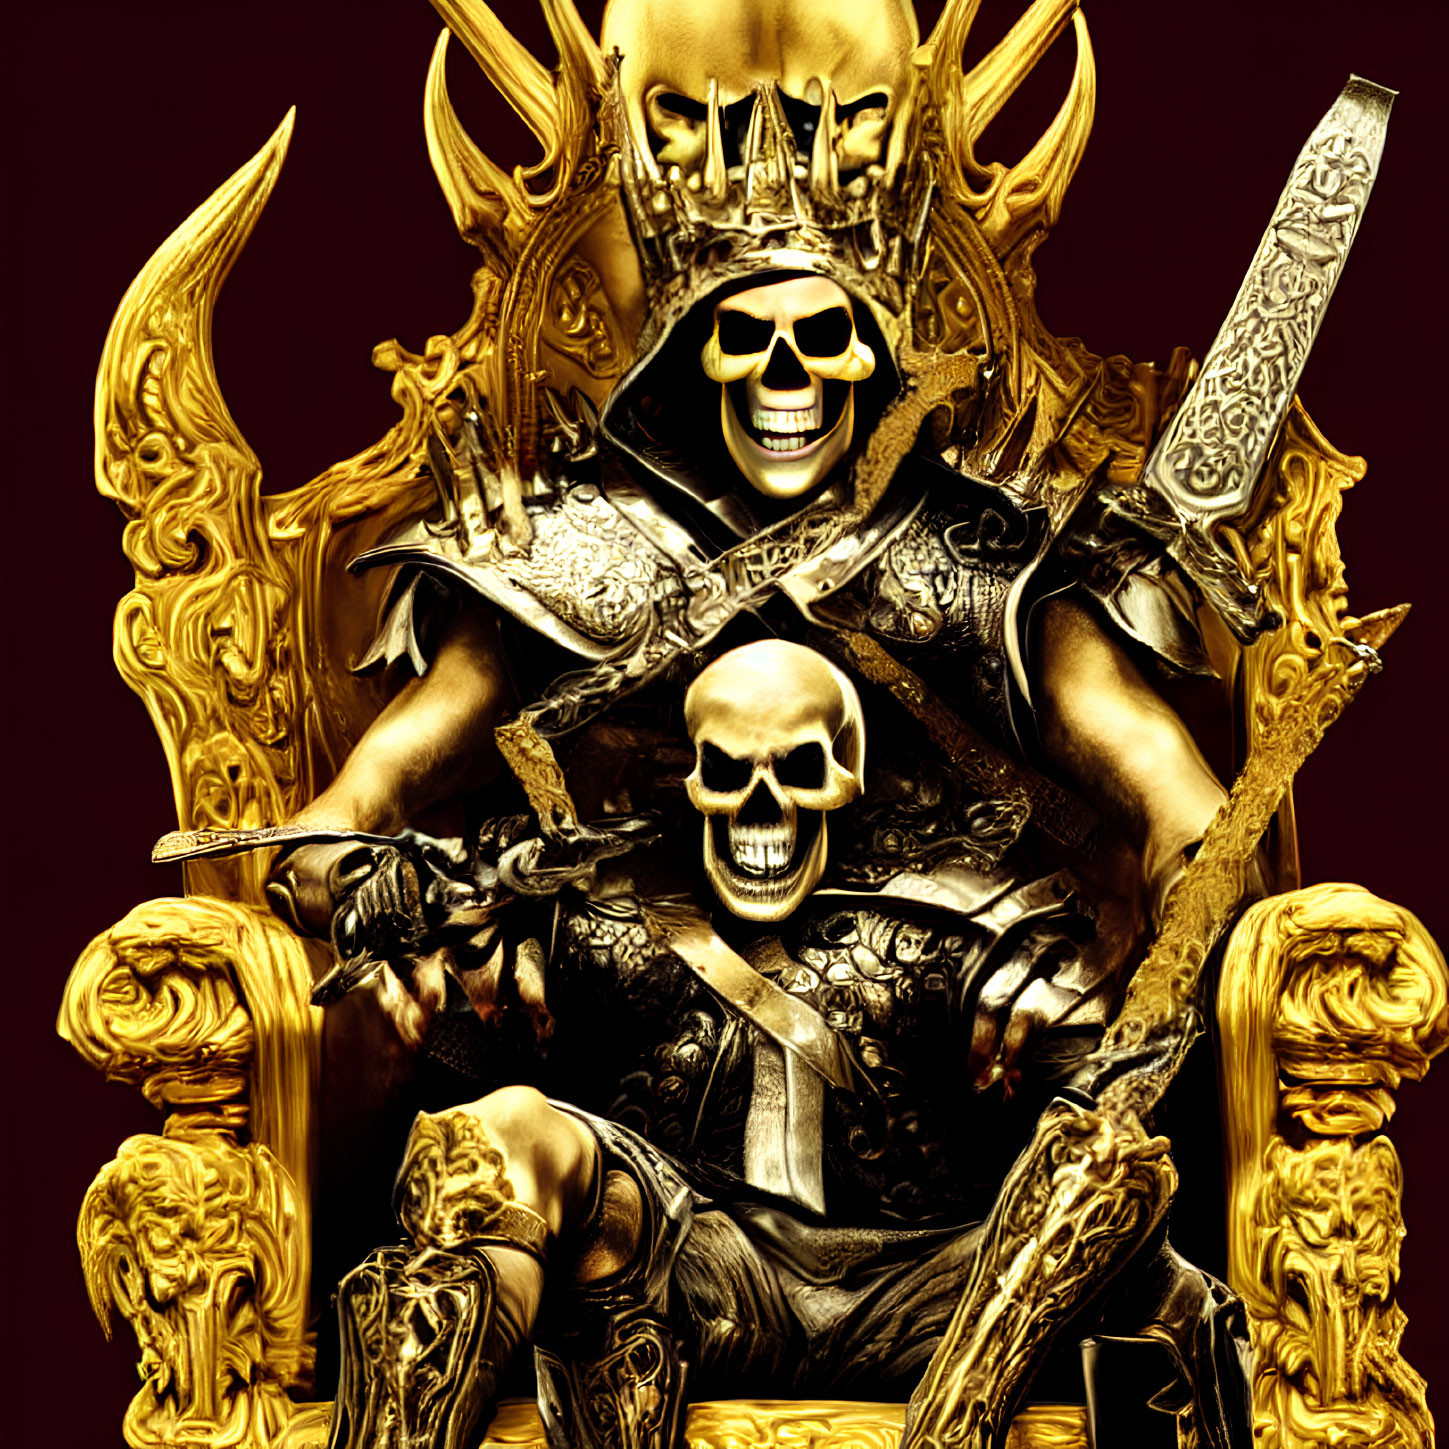 Golden skeleton in intricate armor wields sword amidst menacing skull motifs